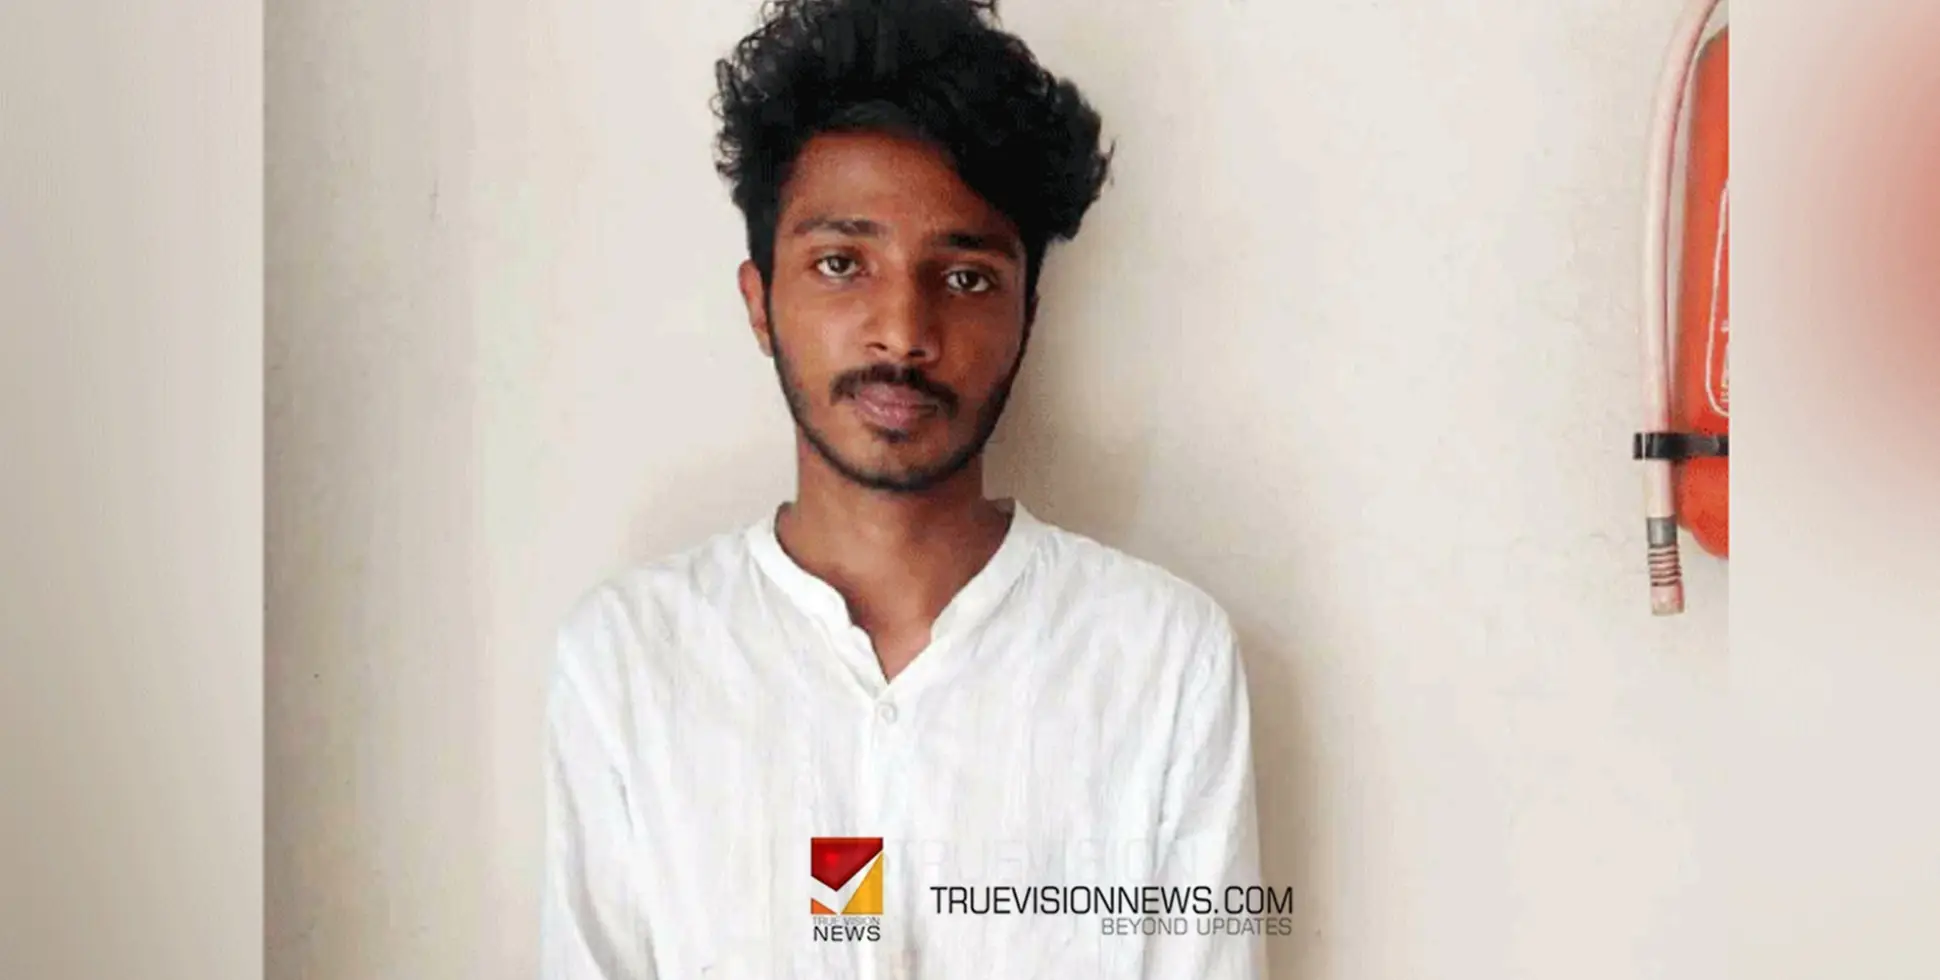  #arrested| ഓൺലൈൻ തട്ടിപ്പ് : ടെ​ലി​ഗ്രാം ആ​പ്പി​ലൂ​ടെ വീ​ട്ട​മ്മ​യി​ൽ​നി​ന്ന് 13 ല​ക്ഷം രൂ​പ ത​ട്ടി​യ പ്ര​തി​ക​ളി​ൽ ഒ​രാ​ൾ അറസ്റ്റിൽ